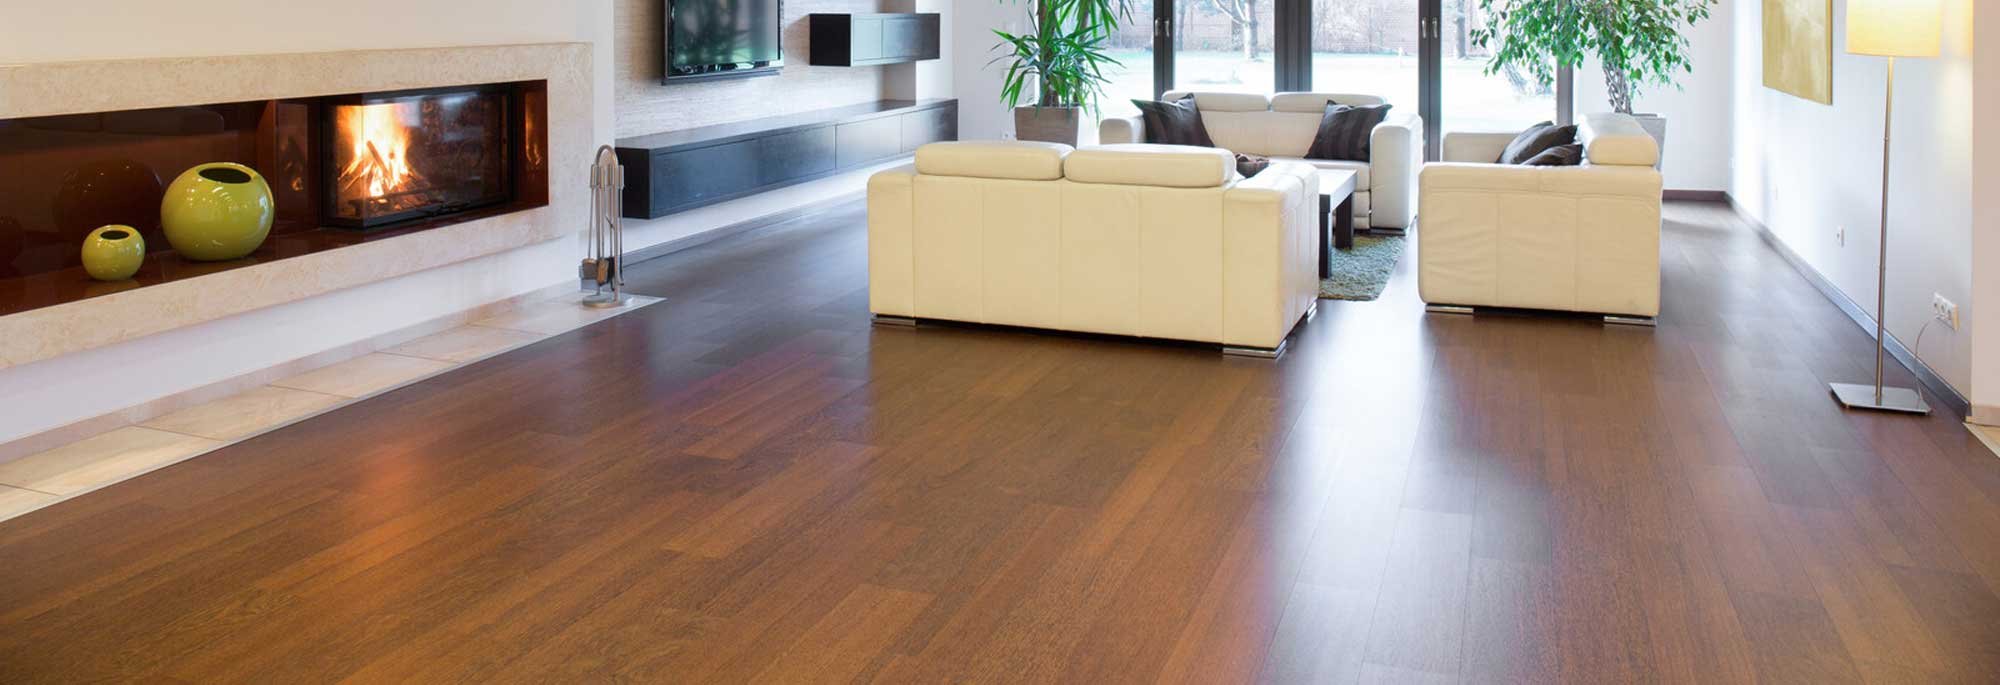 Karndean Flooring - Anderson Tuftex Carpet & WeCork Flooring